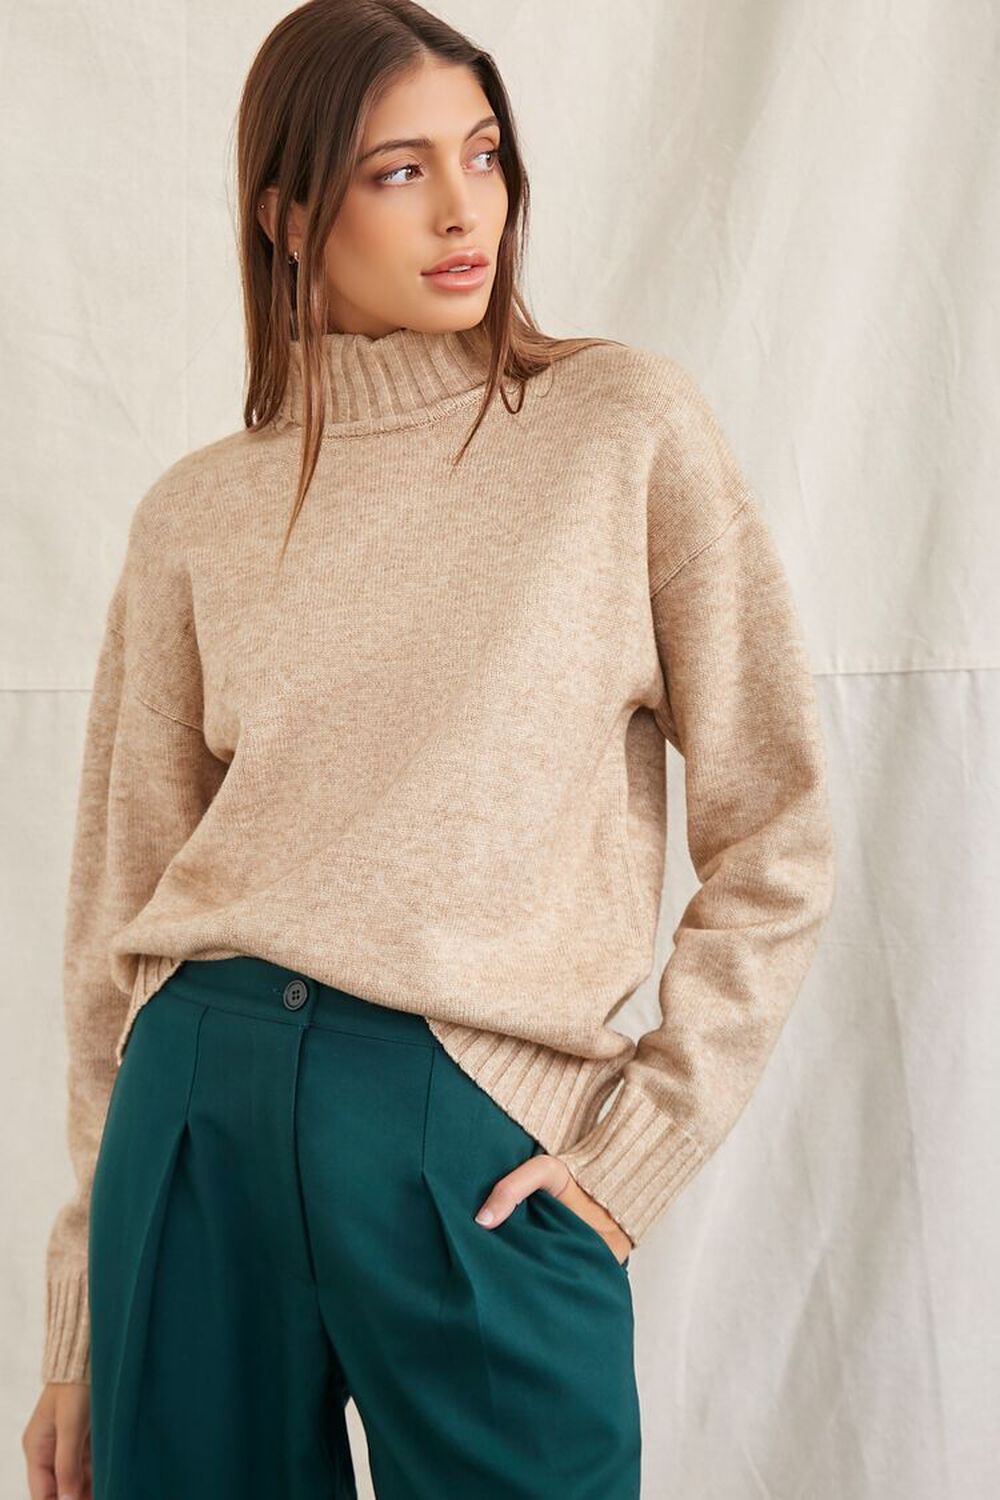 Marled Knit Sweater, image 1